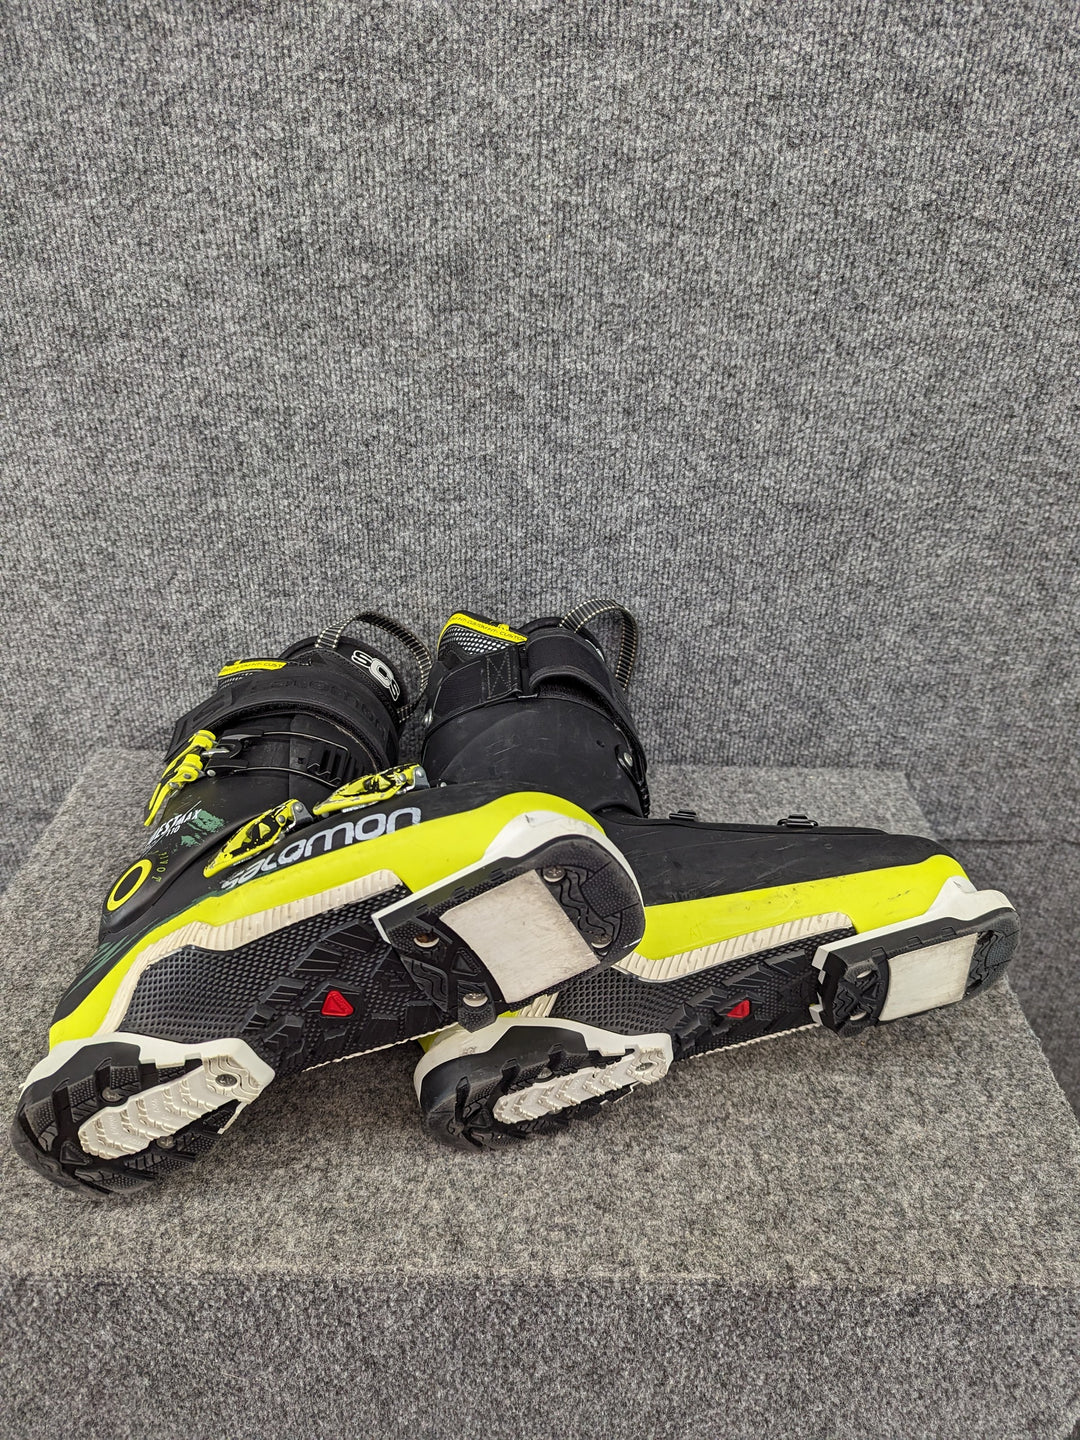 Salomon Size 9.5/27.5 Alpine Ski Boots